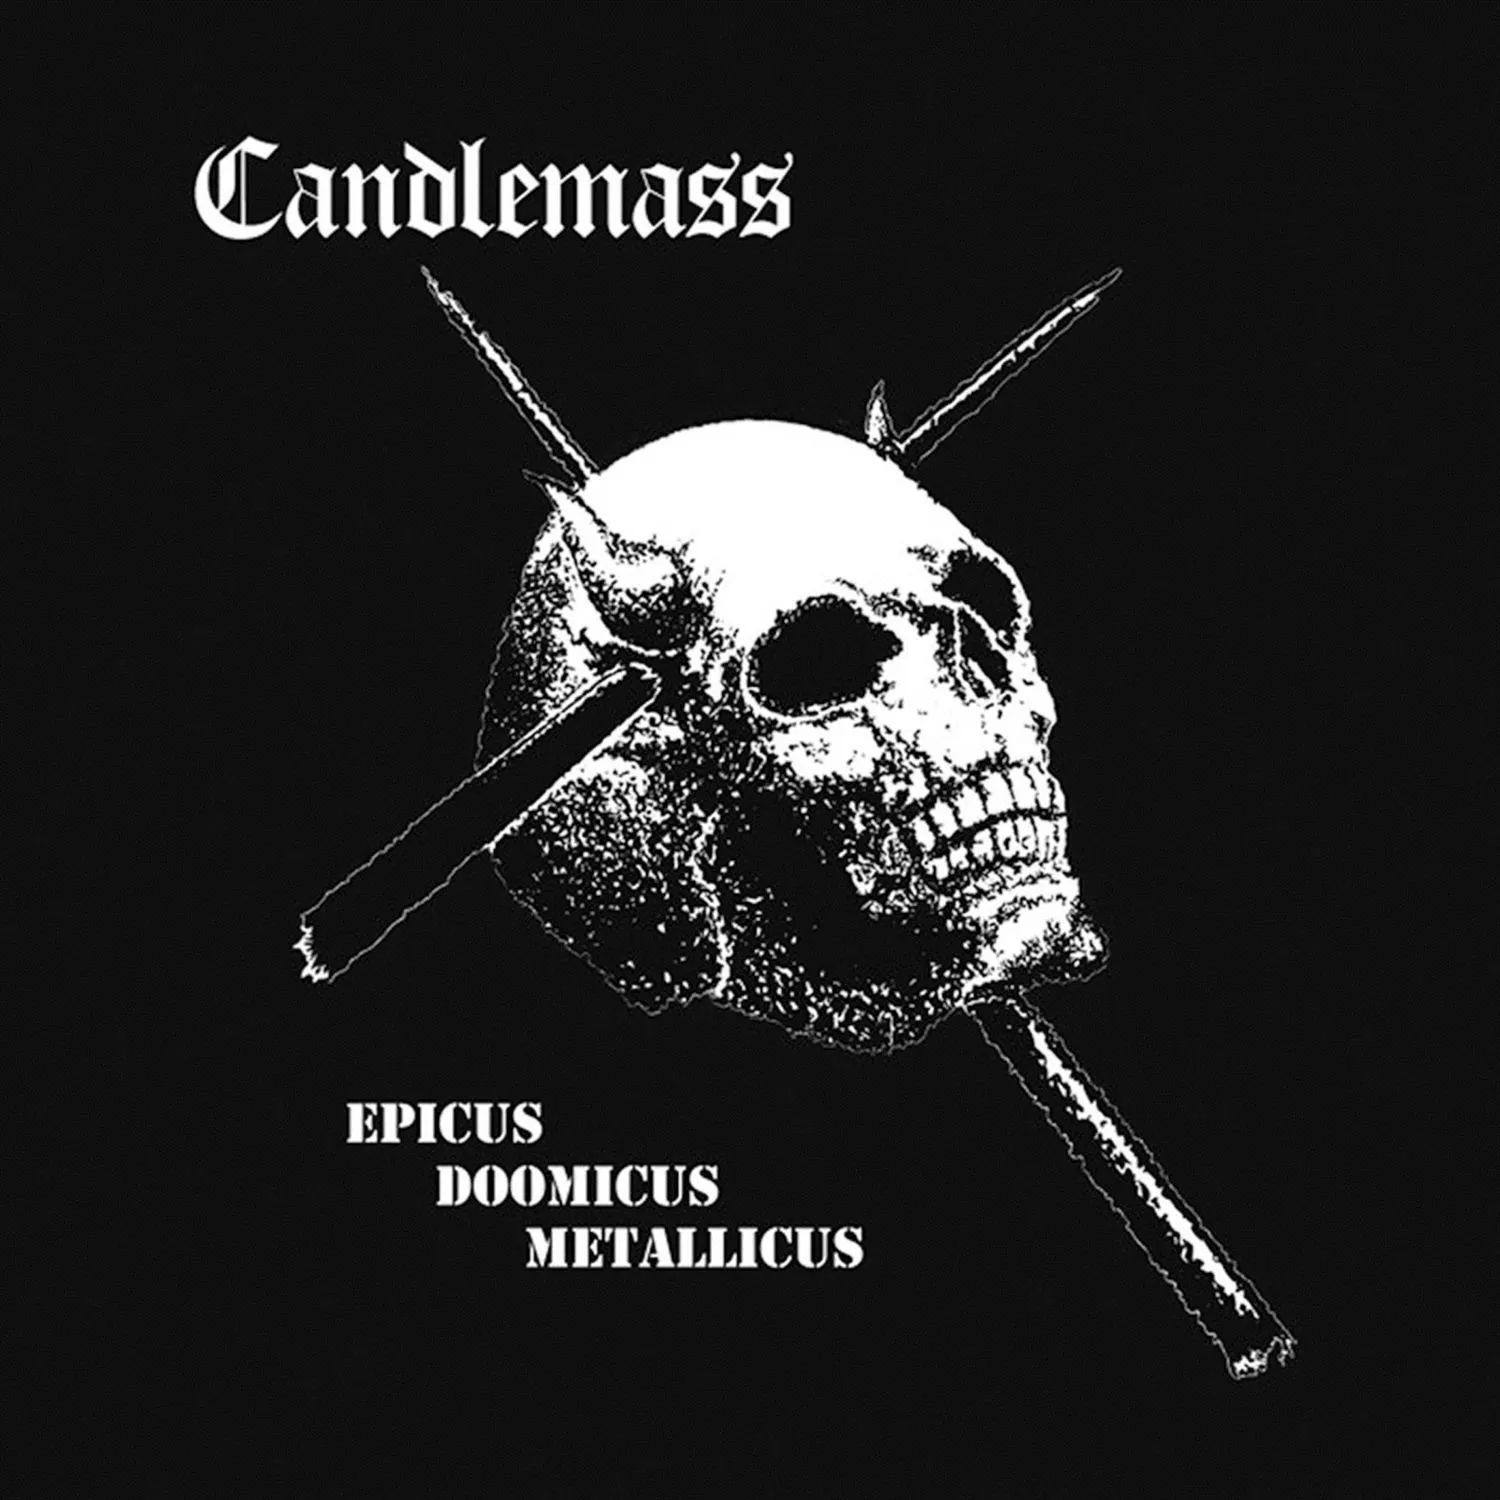 Candlemass | Black Vinyl LP | Epicus Doomicus Metallicus |